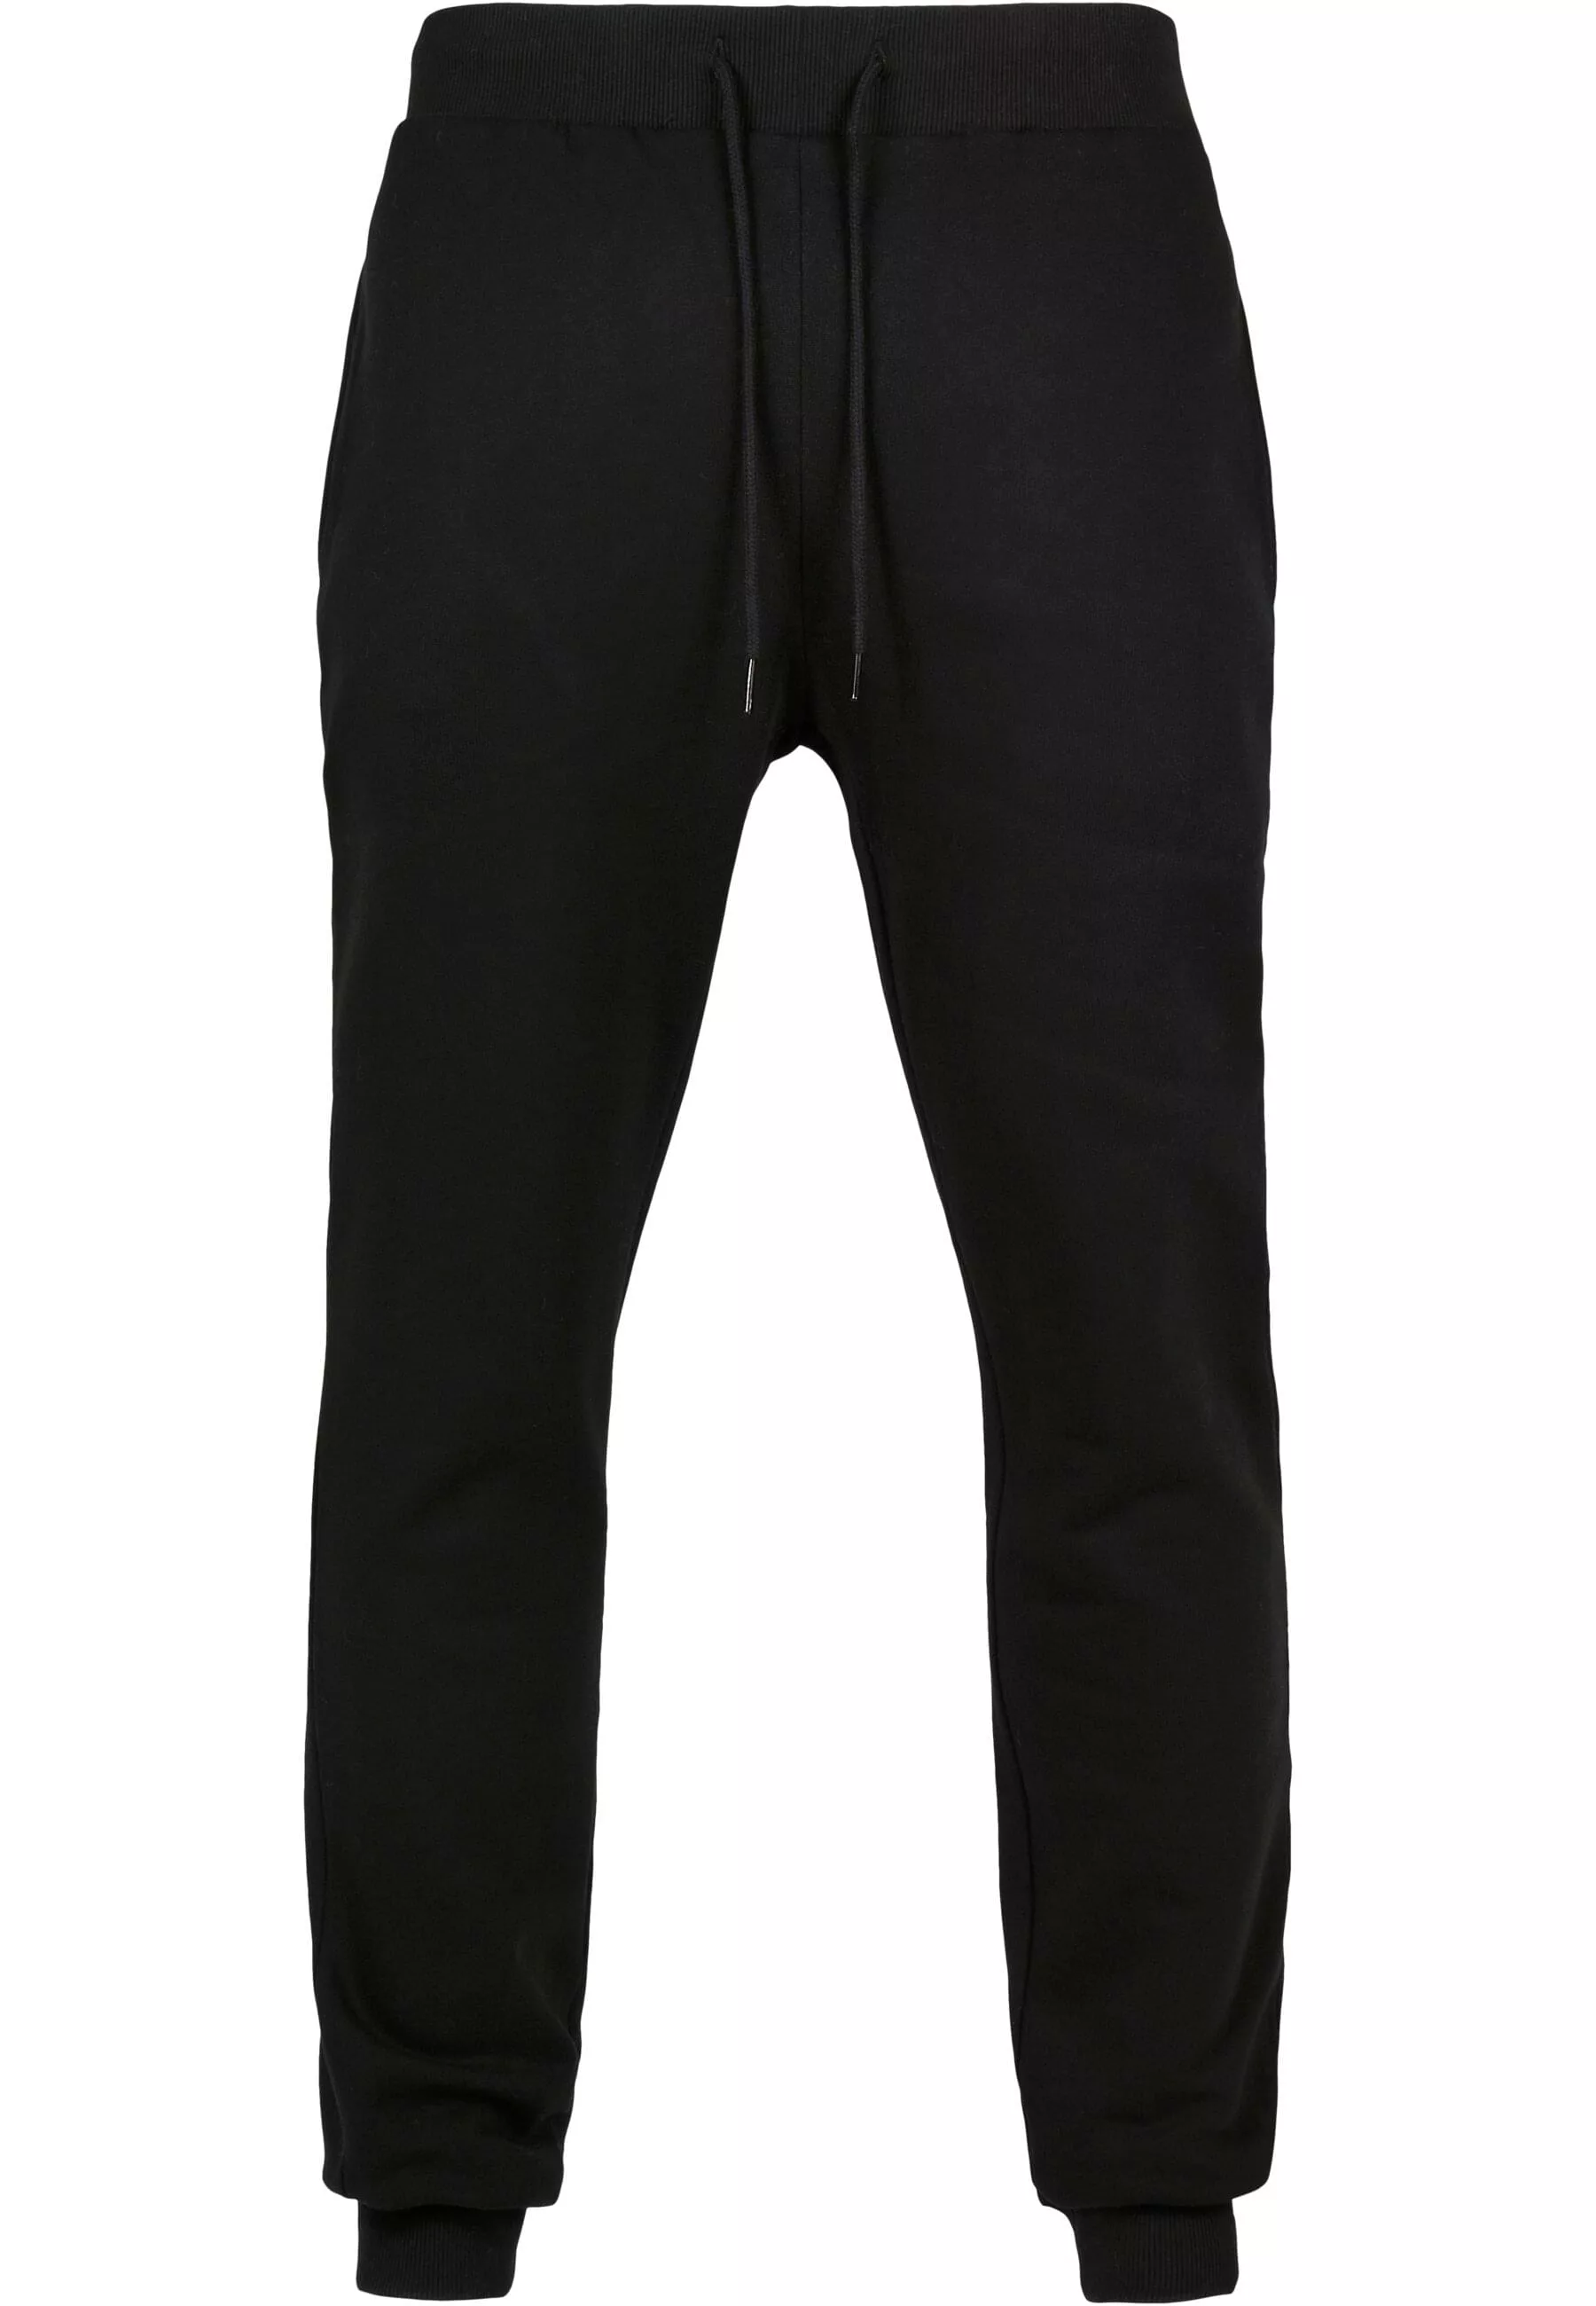 URBAN CLASSICS Jogginghose "Urban Classics Herren Organic Basic Sweatpants" günstig online kaufen